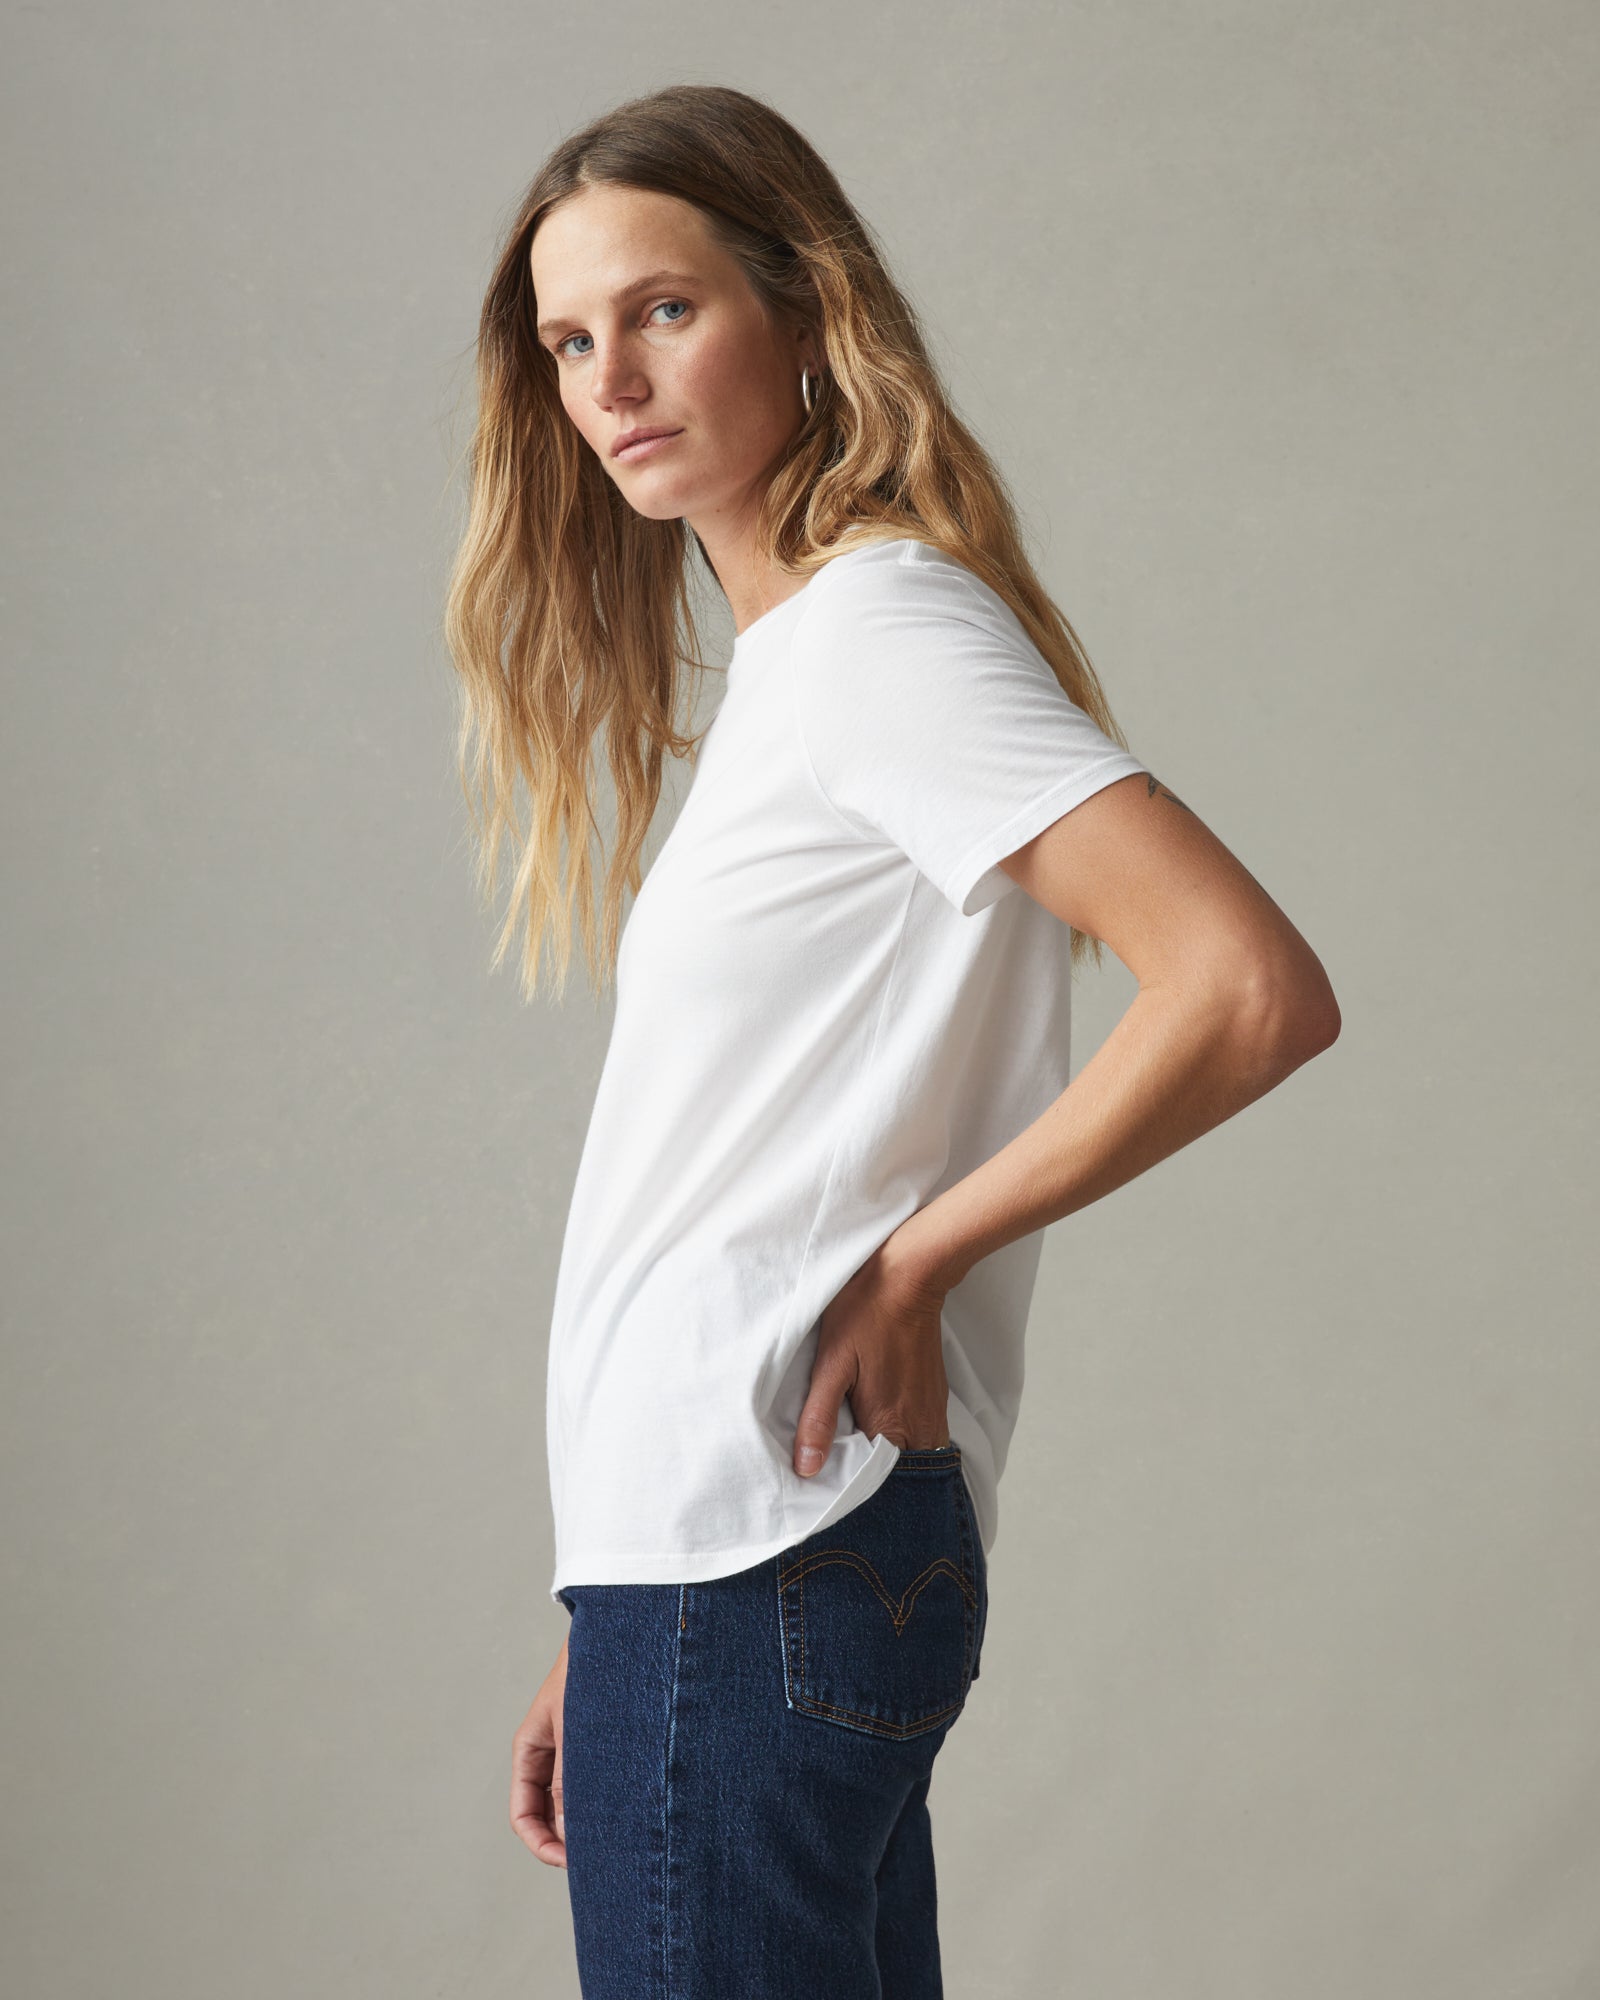 Cotton 36b White T Shirt Bra - Get Best Price from Manufacturers